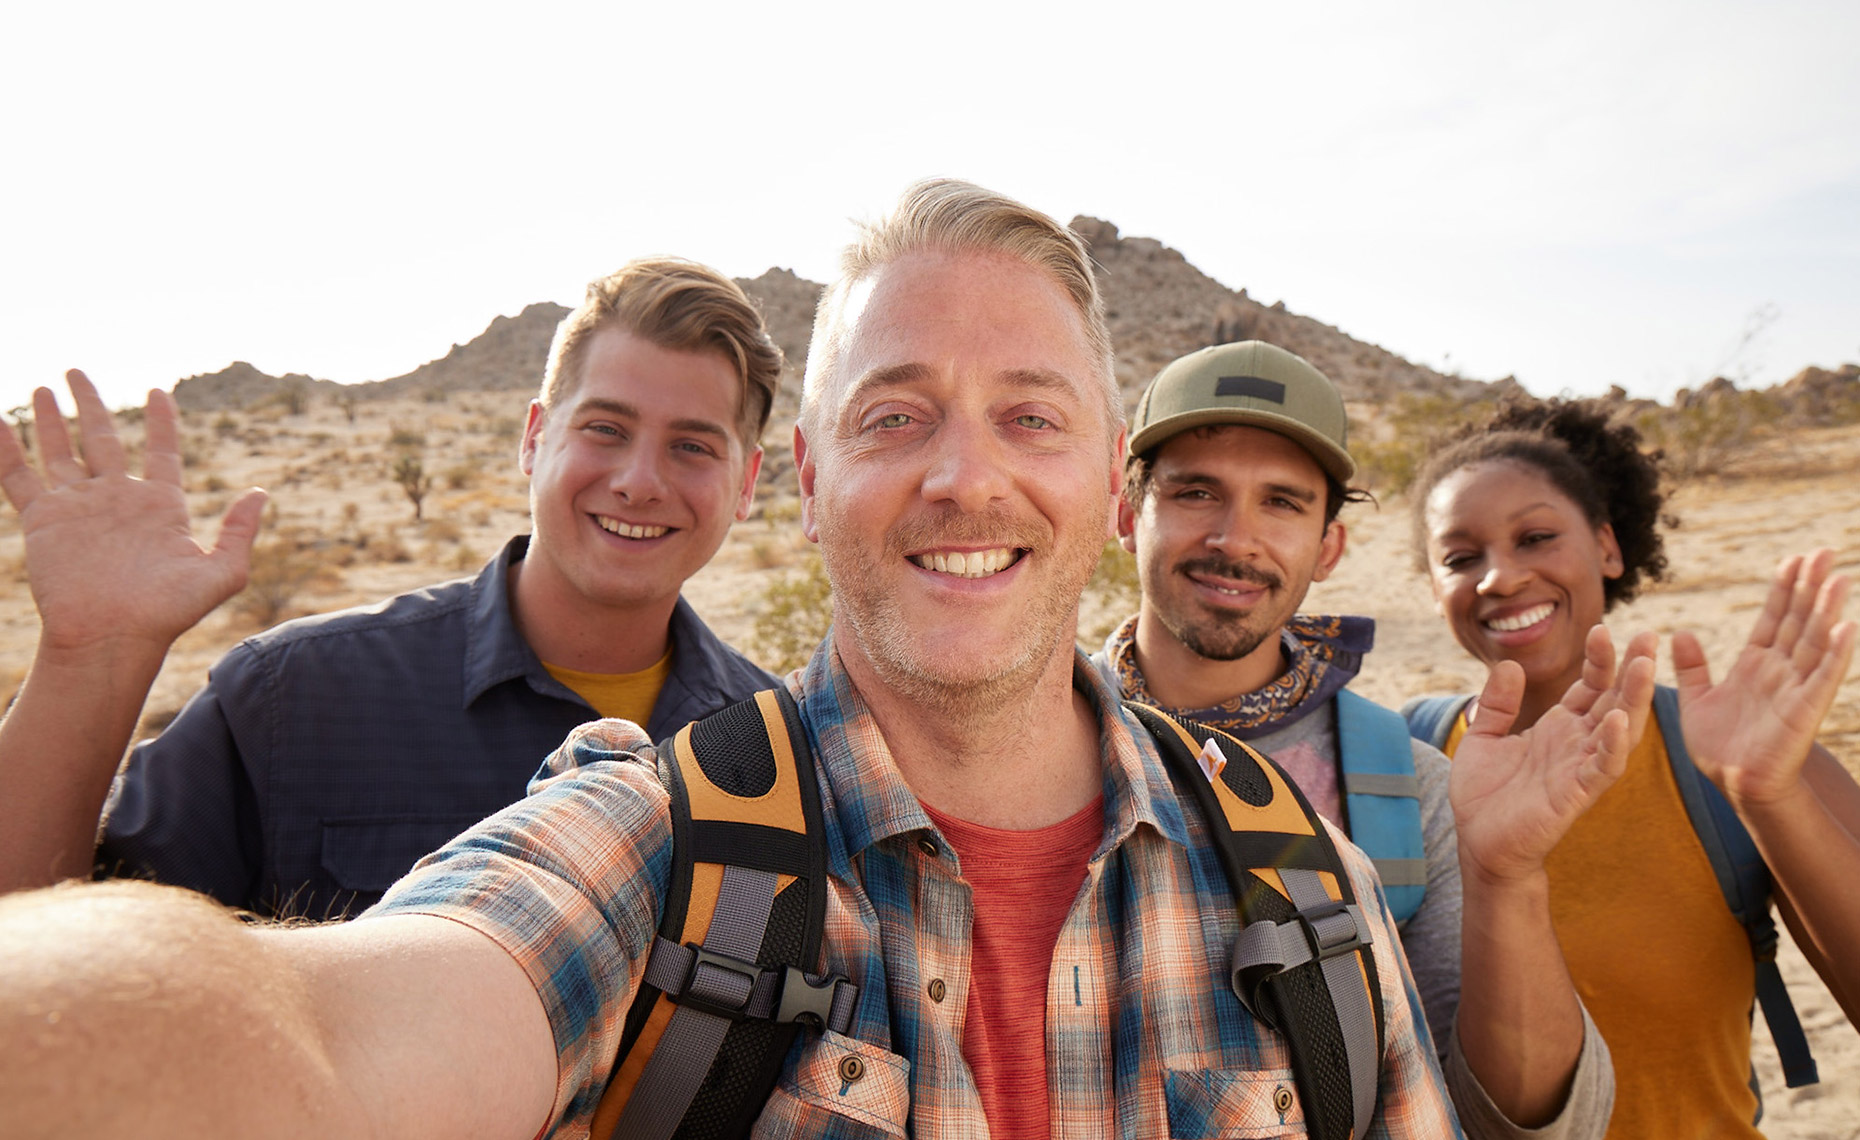 Selfie group photo on the hike